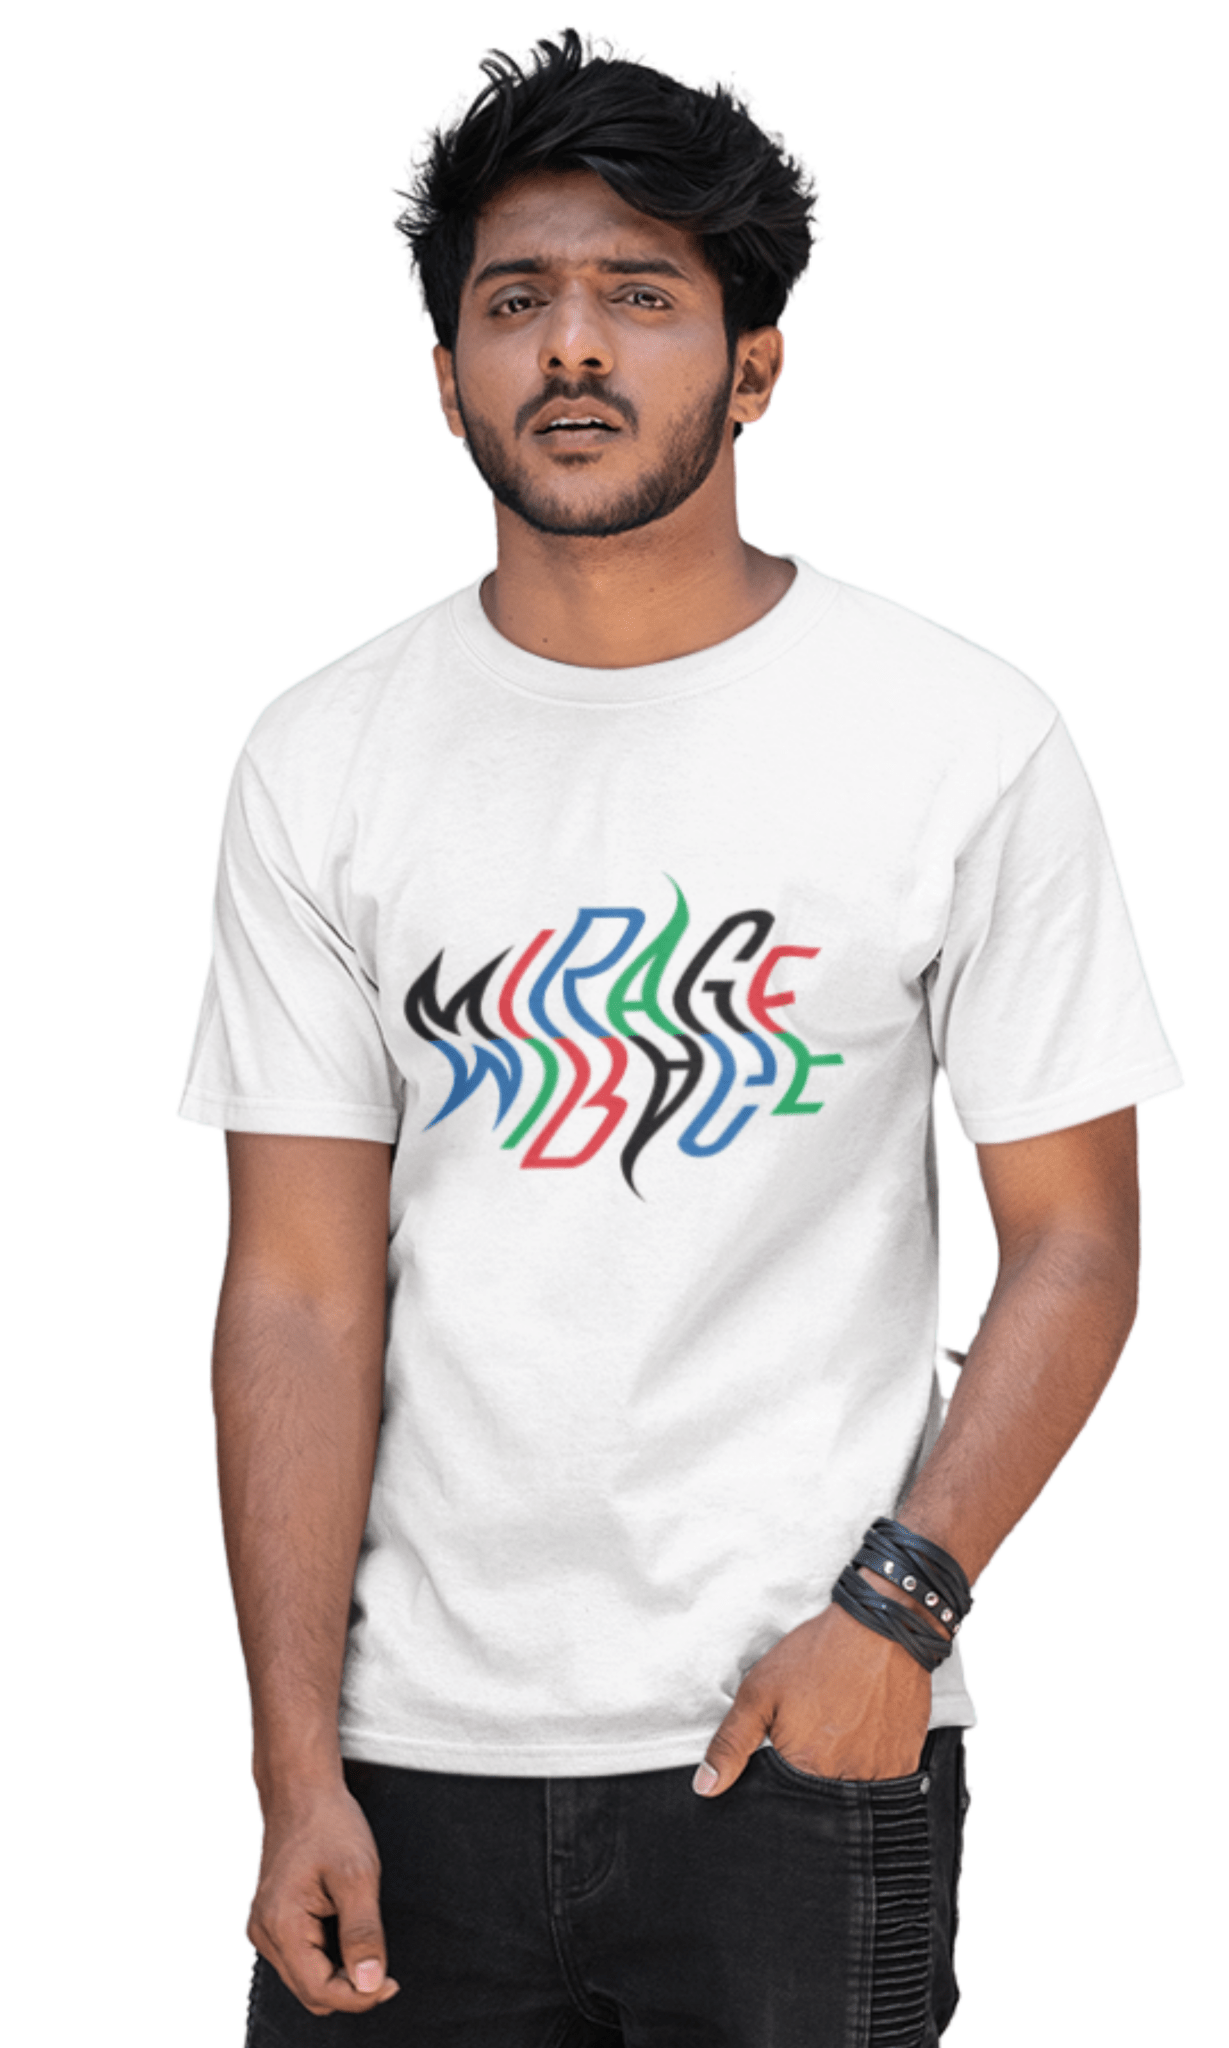 Mirage Regular Men's T-Shirt - Hush and Wear